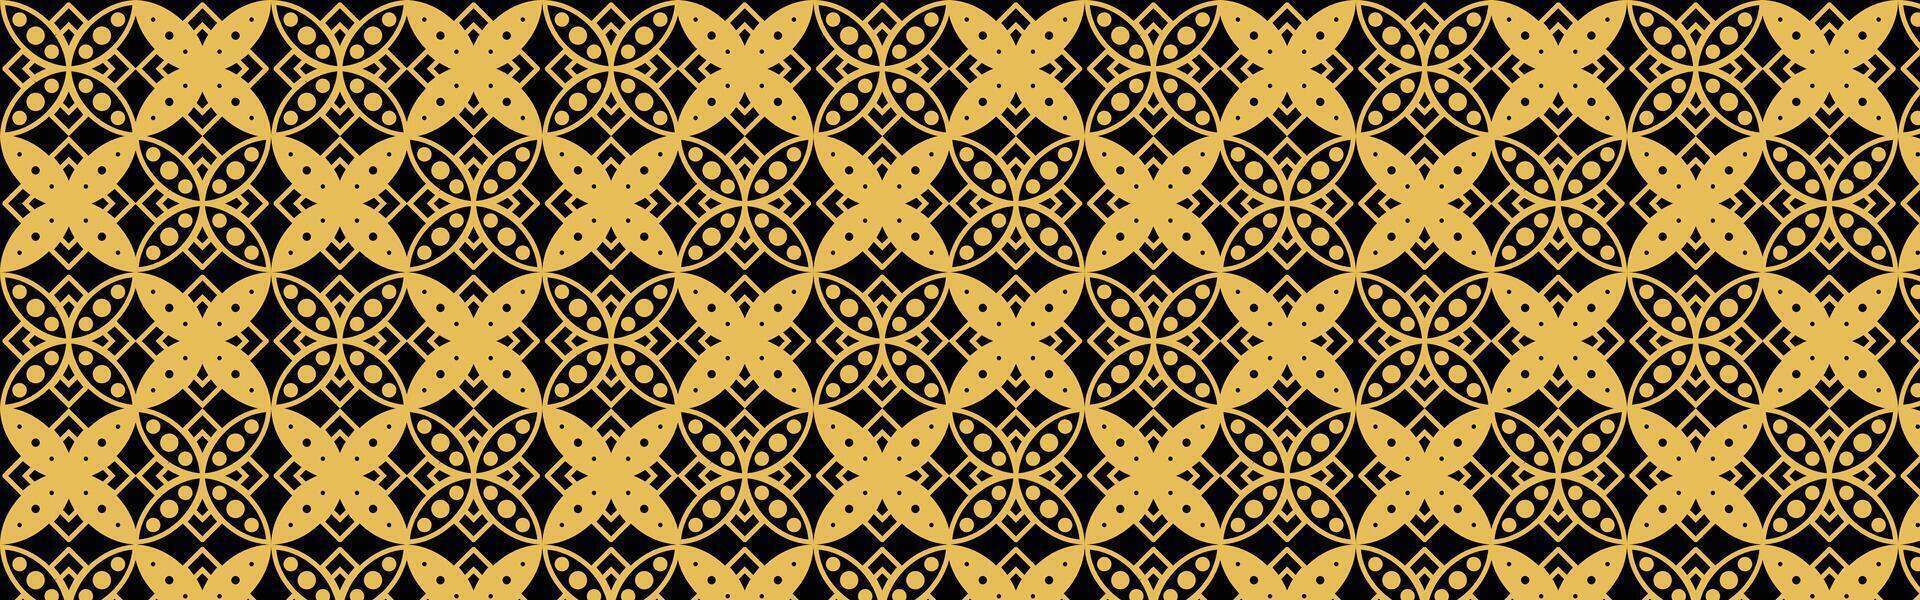 moroccan arabic ramadan seamless pattern backround islamic ornament mosque vector